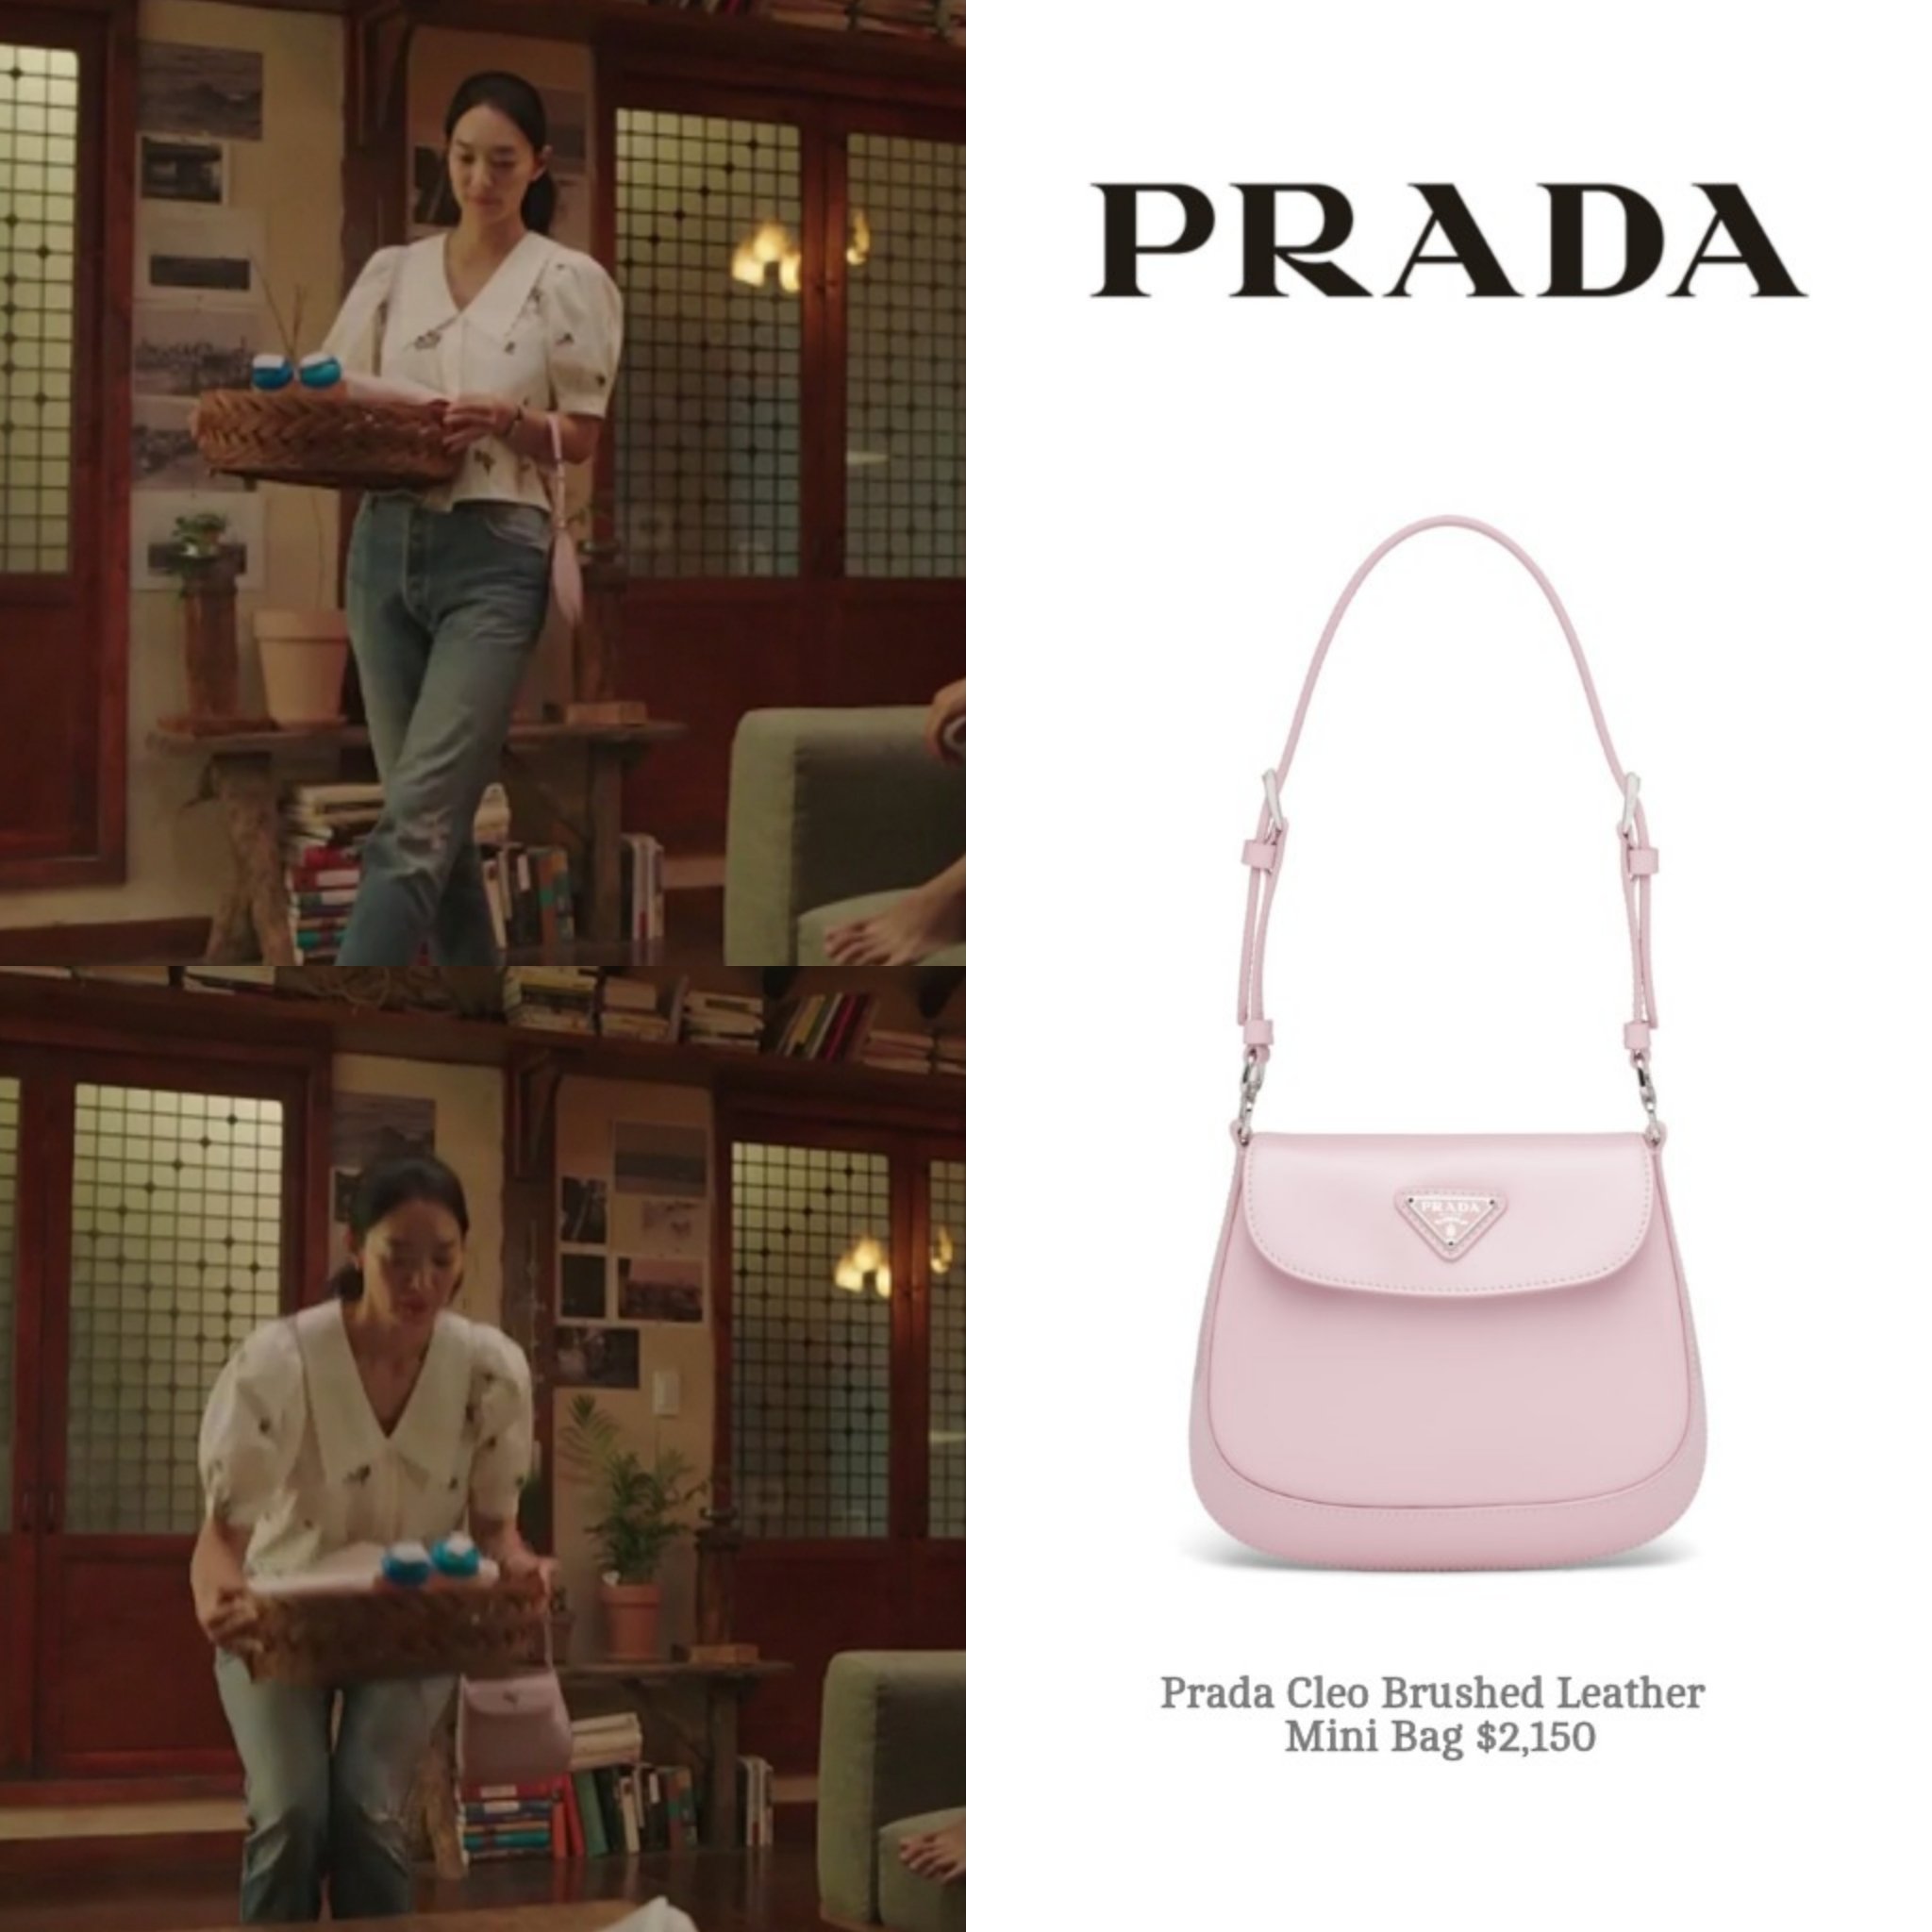 Kdrama_Fashion on X: Shin Min-Ah carried PRADA Prada Cleo Brushed